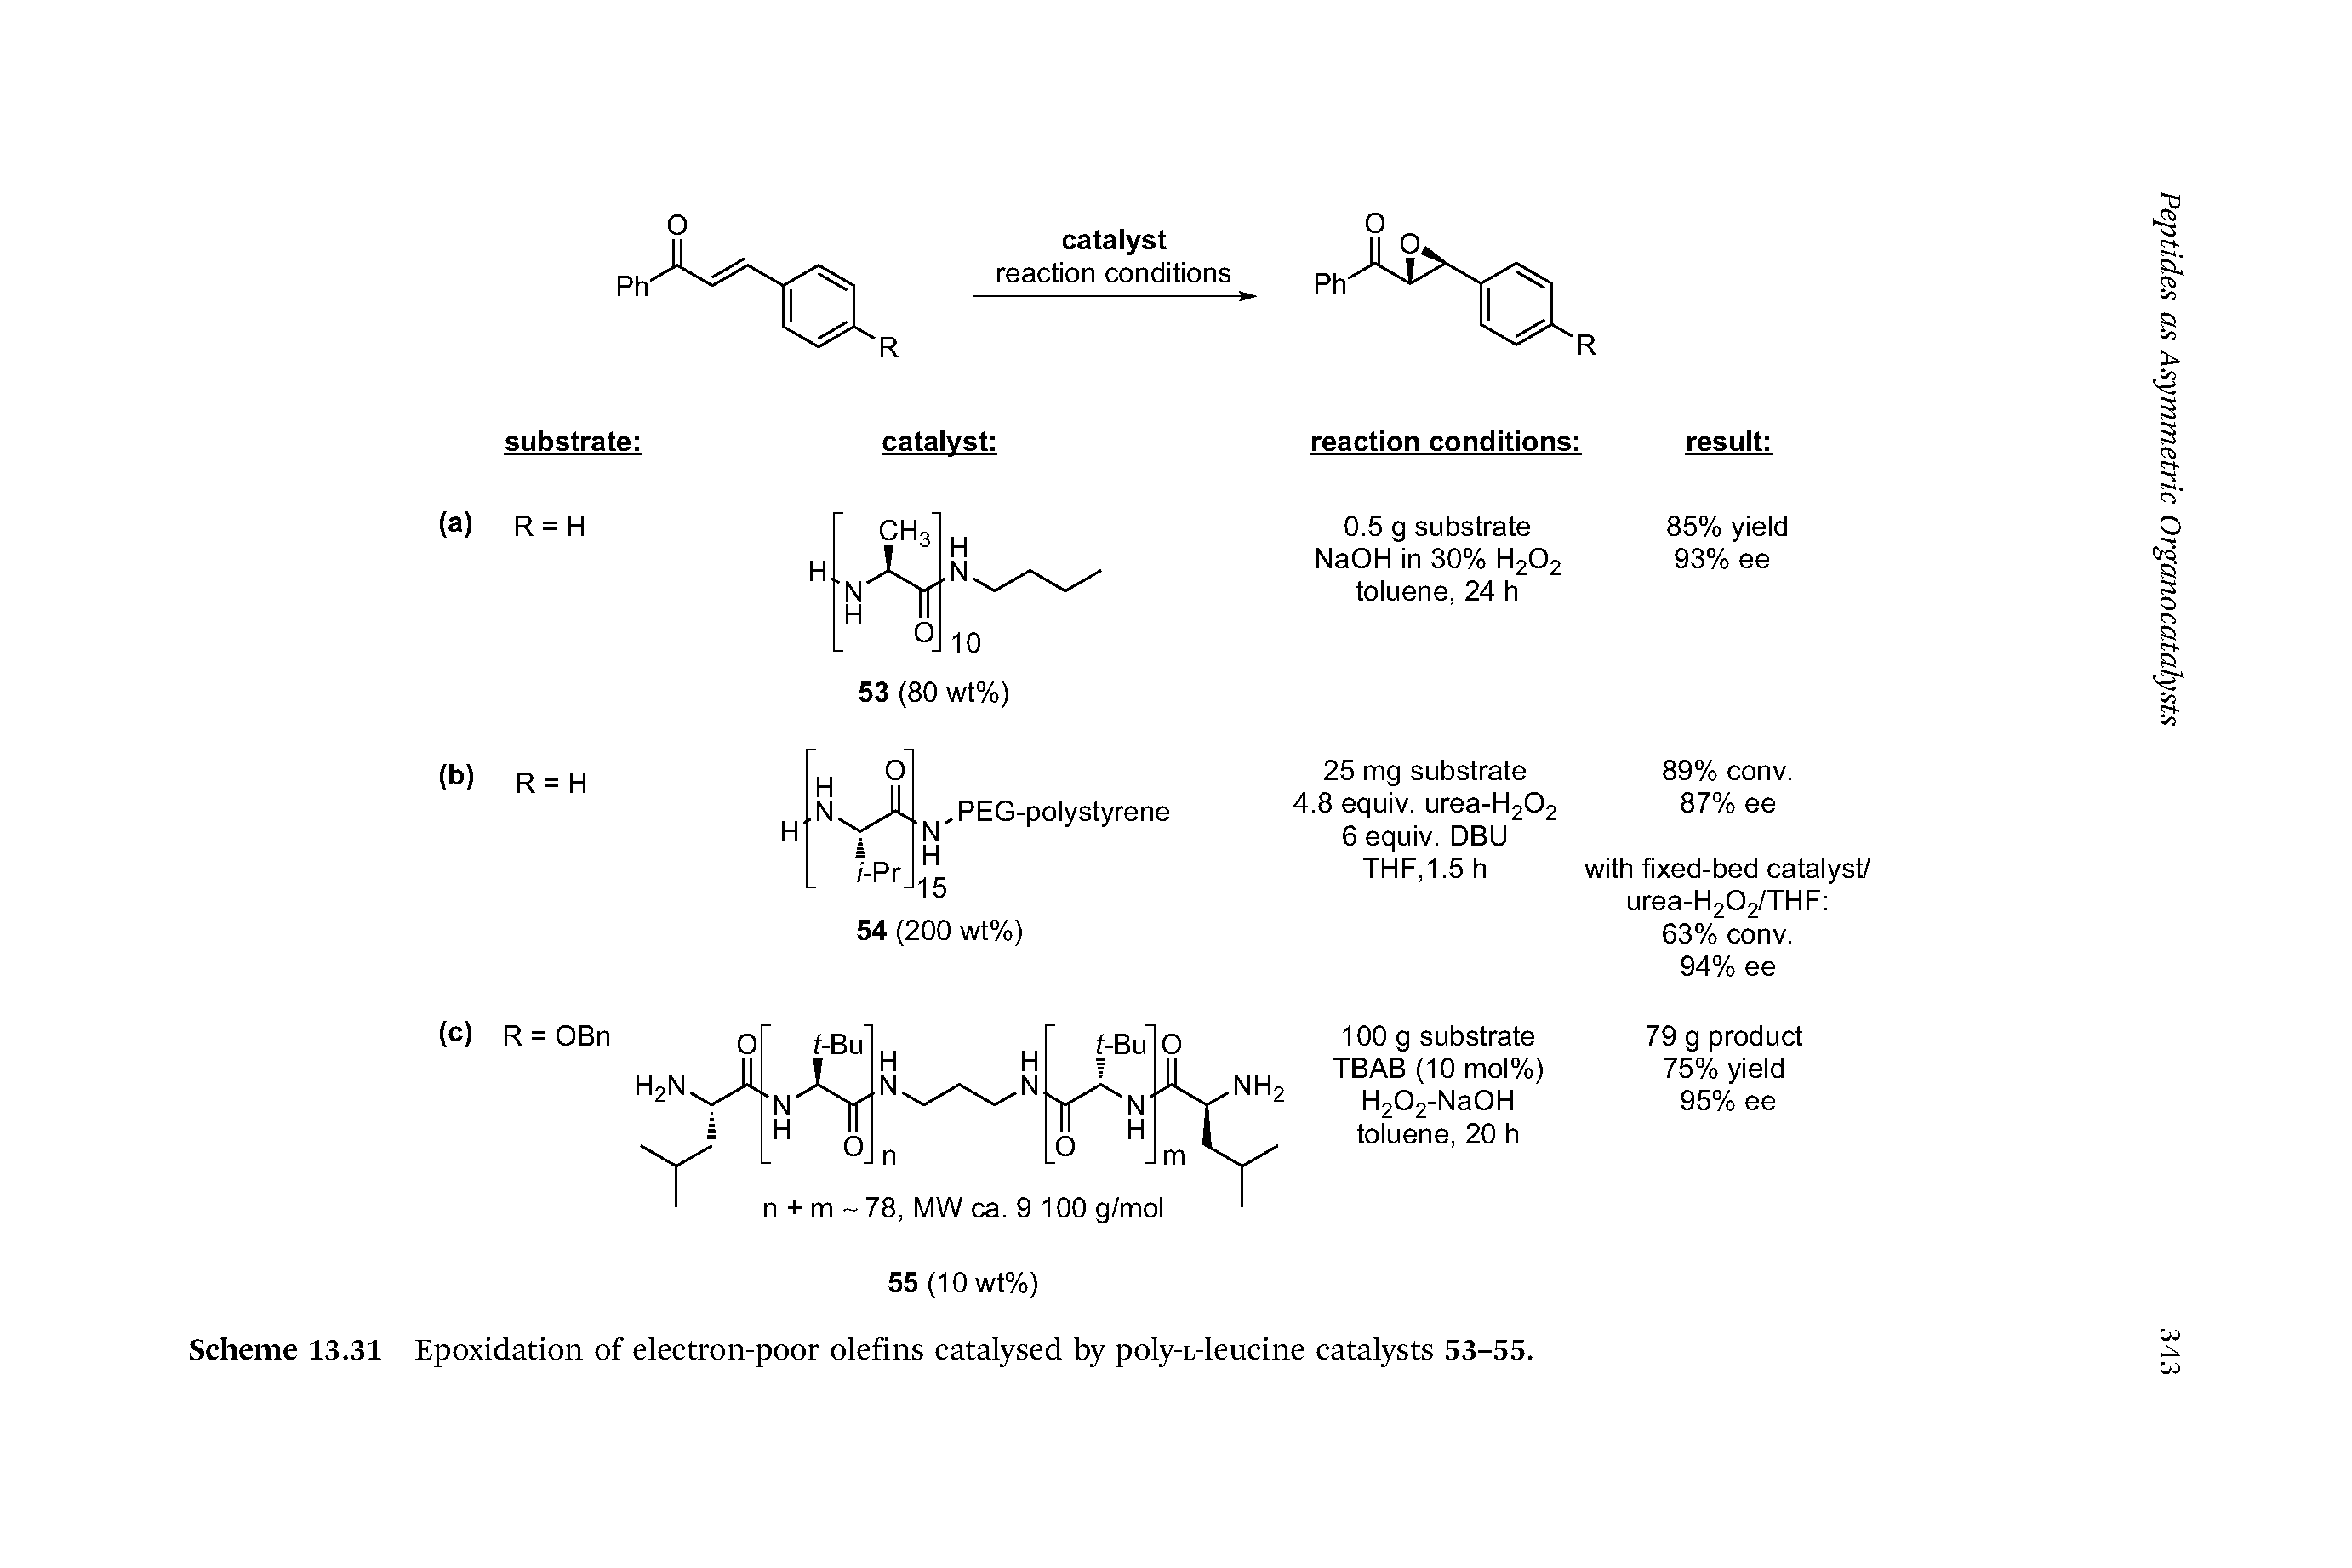 Scheme 13.31 Epoxidation of electron-poor olefins catalysed by poly-L-leucine catalysts 53-55.